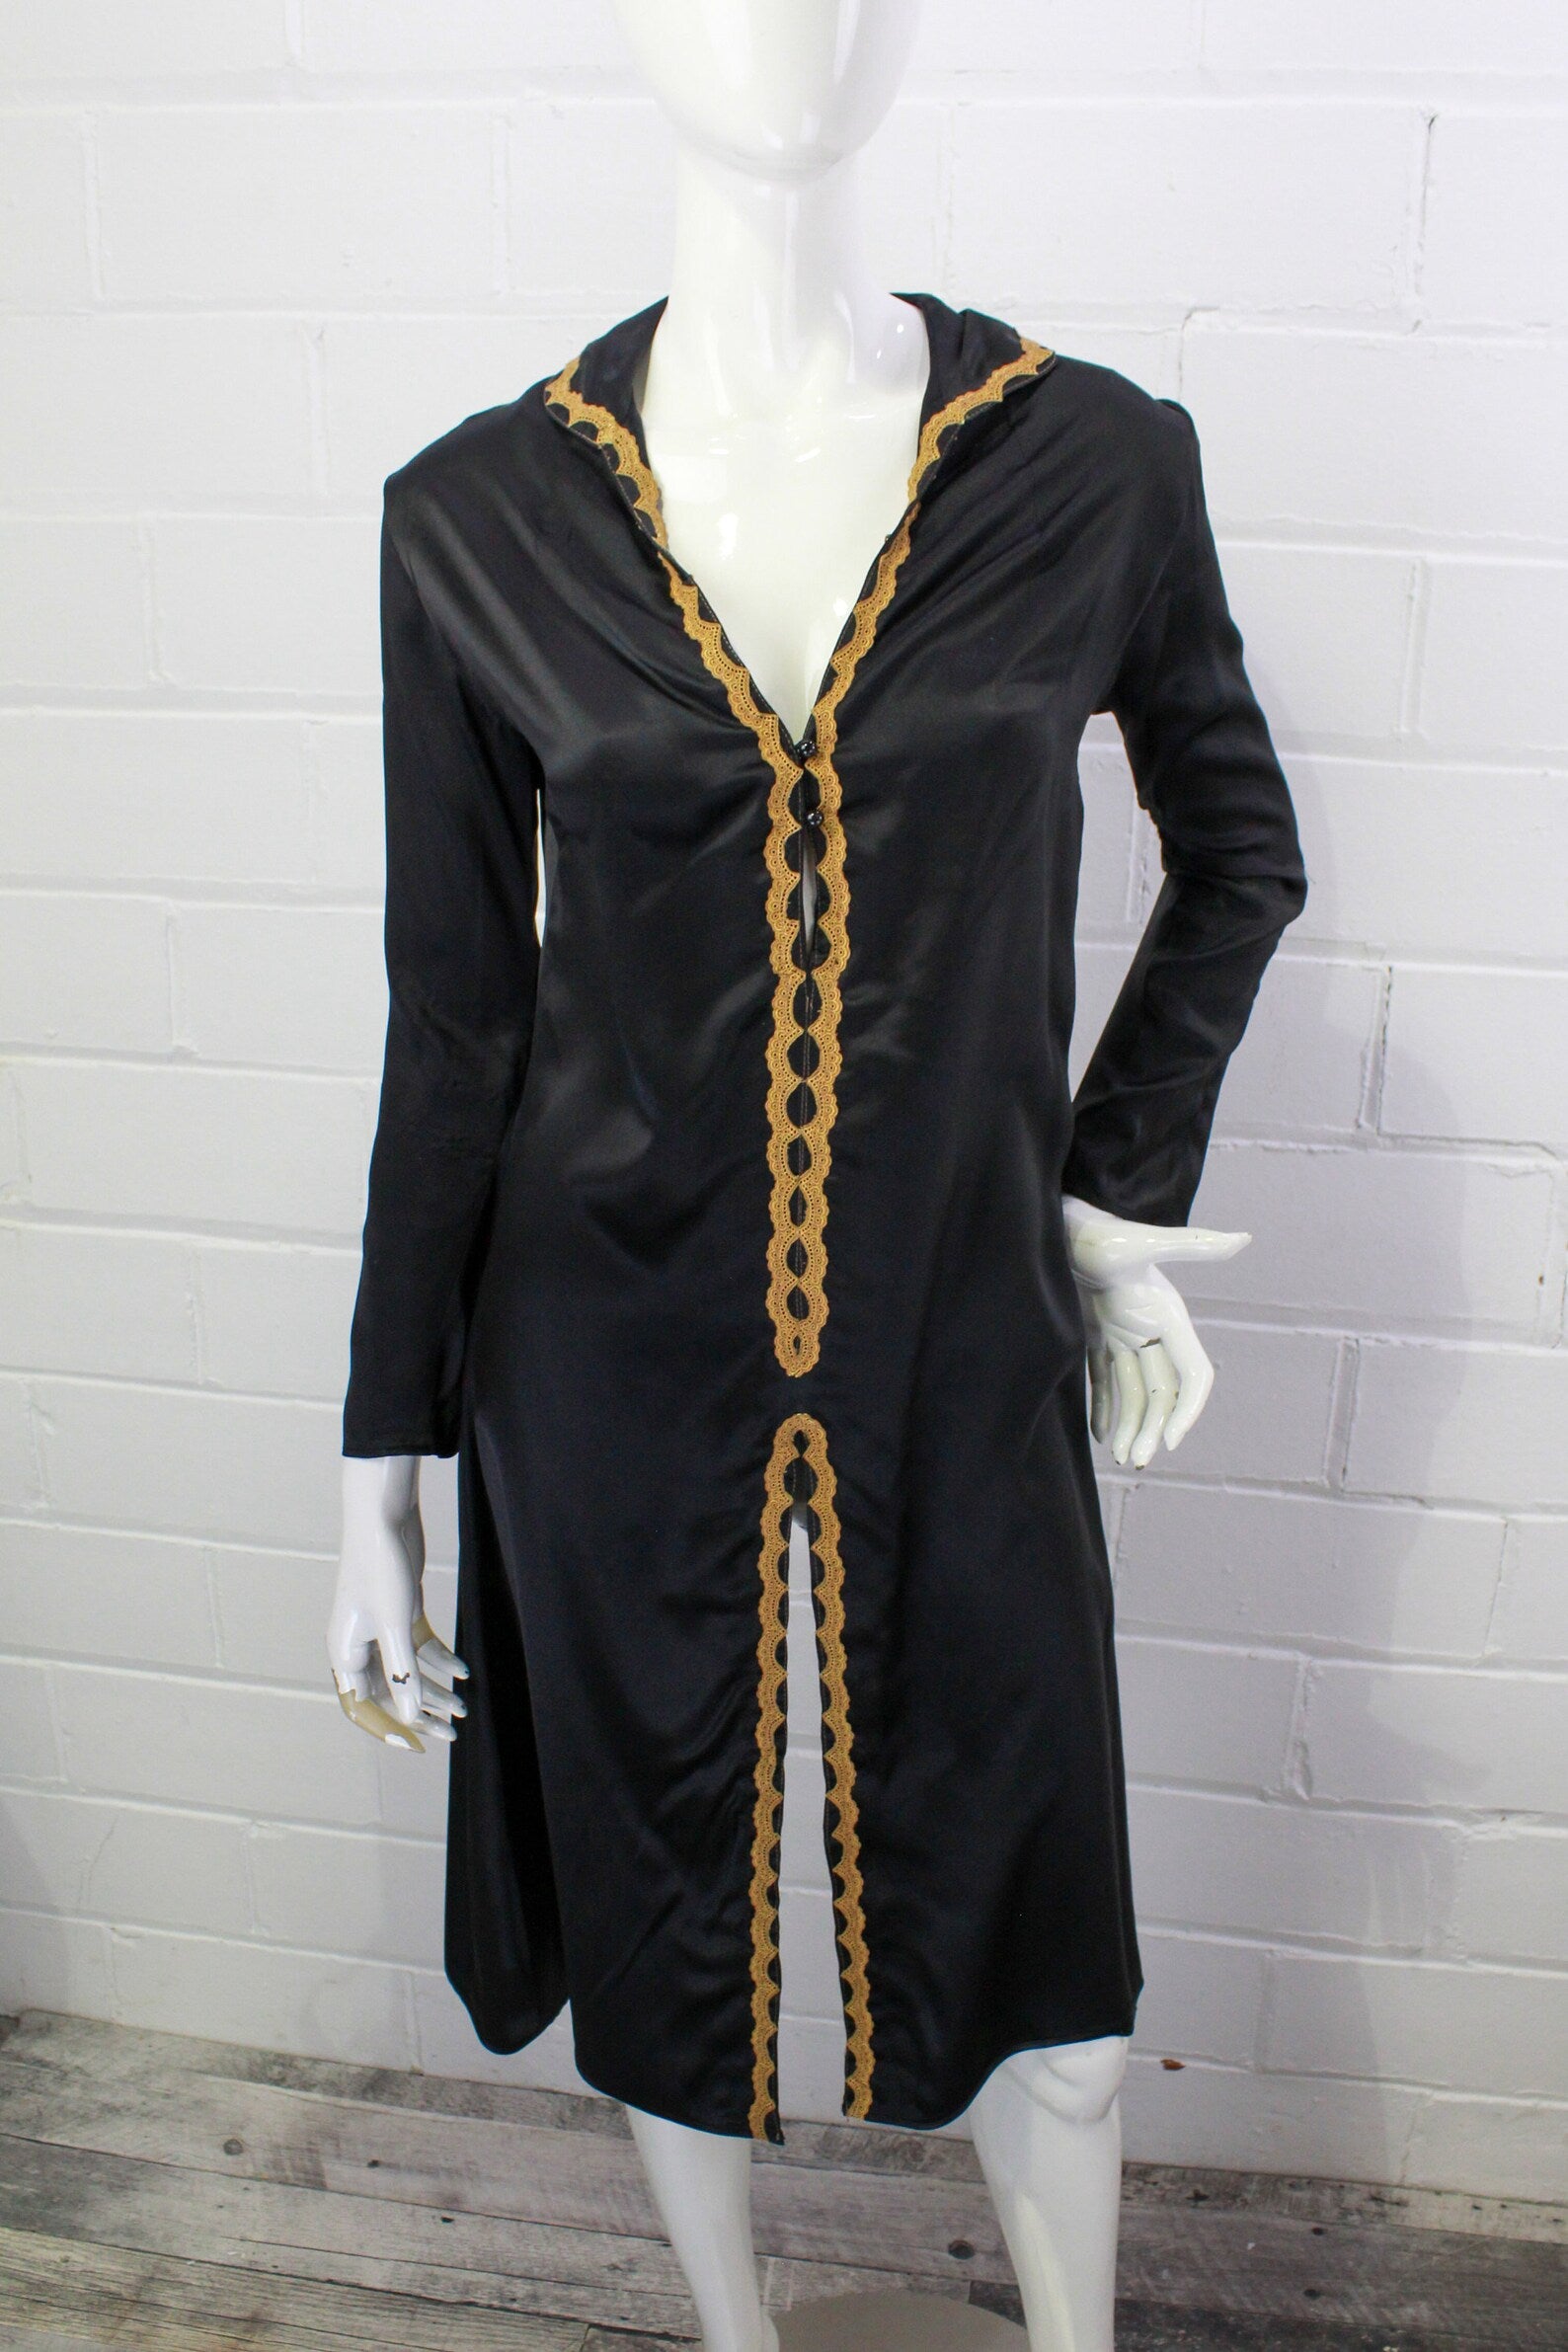 Reproduction 1930s style Black Liquid Satin Long Sleeve Tunic Dress, Small. Ian Drummond Vintage. 